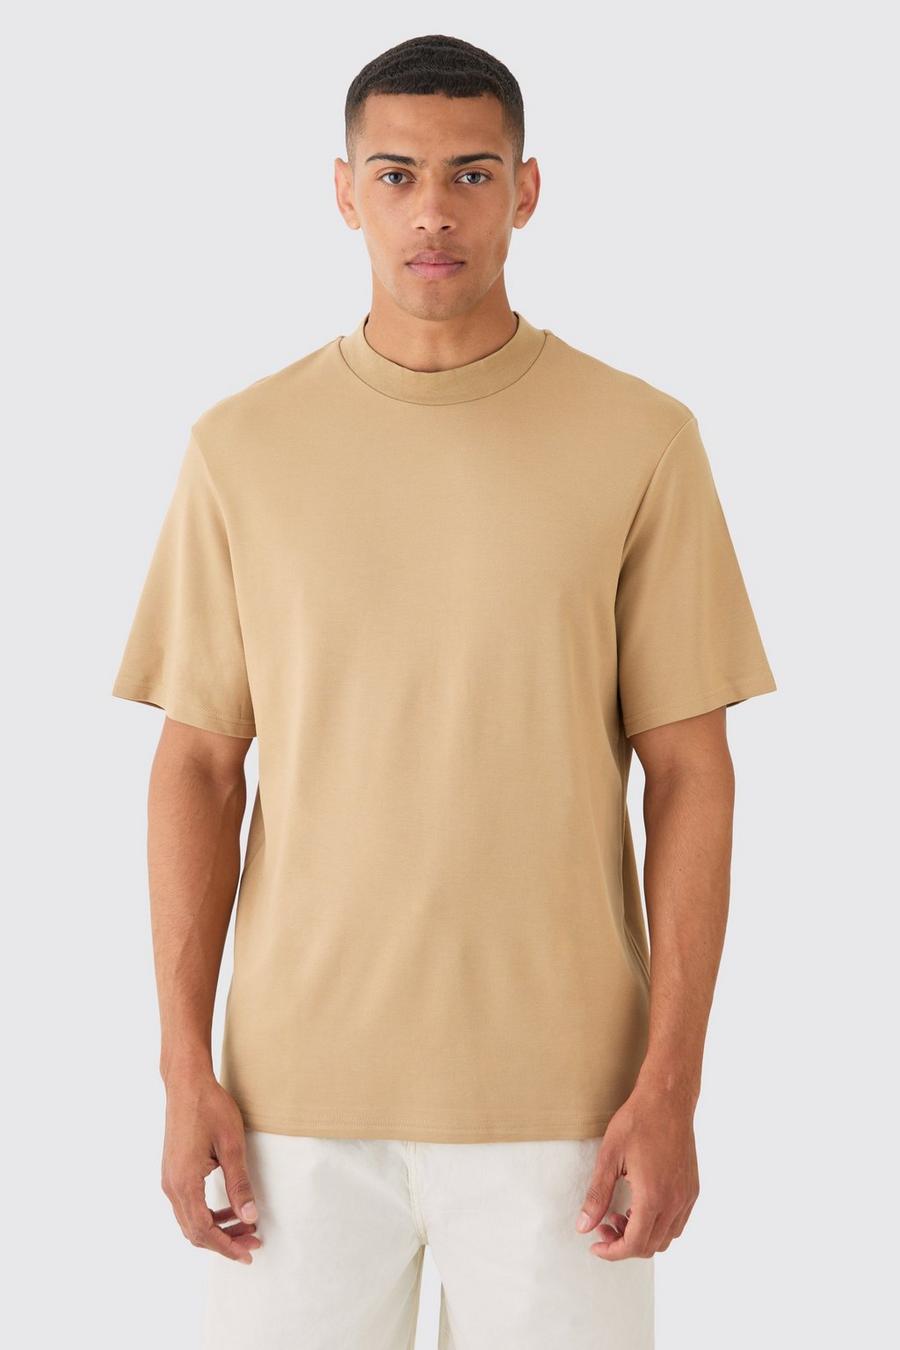 Camiseta Premium súper gruesa con cuello extendido, Oatmeal